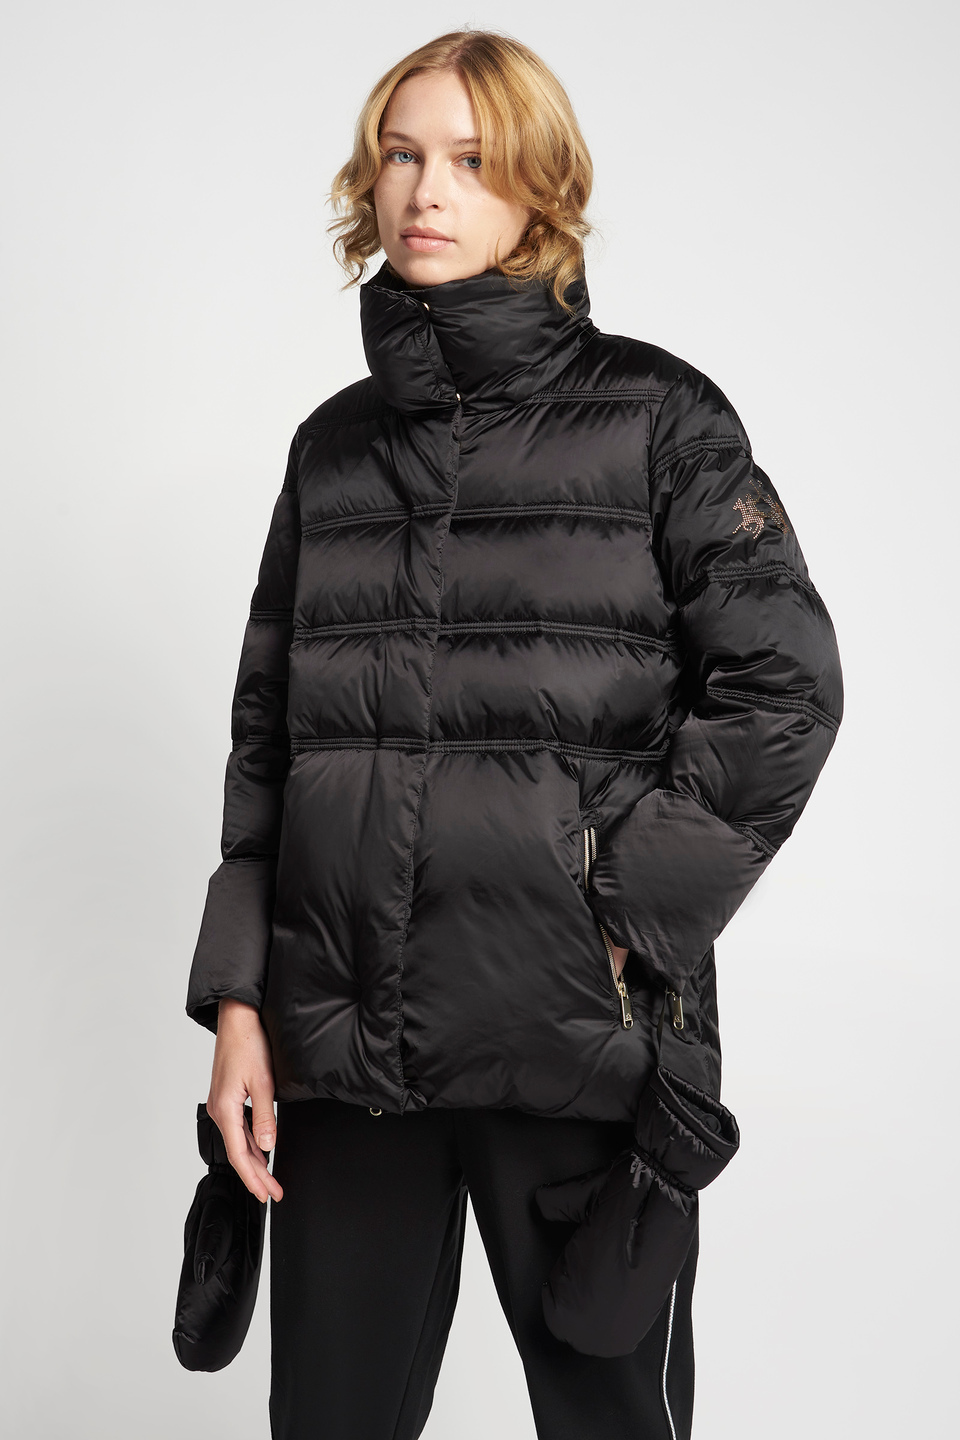 Shiny-look hooded down jacket | La Martina - Official Online Shop